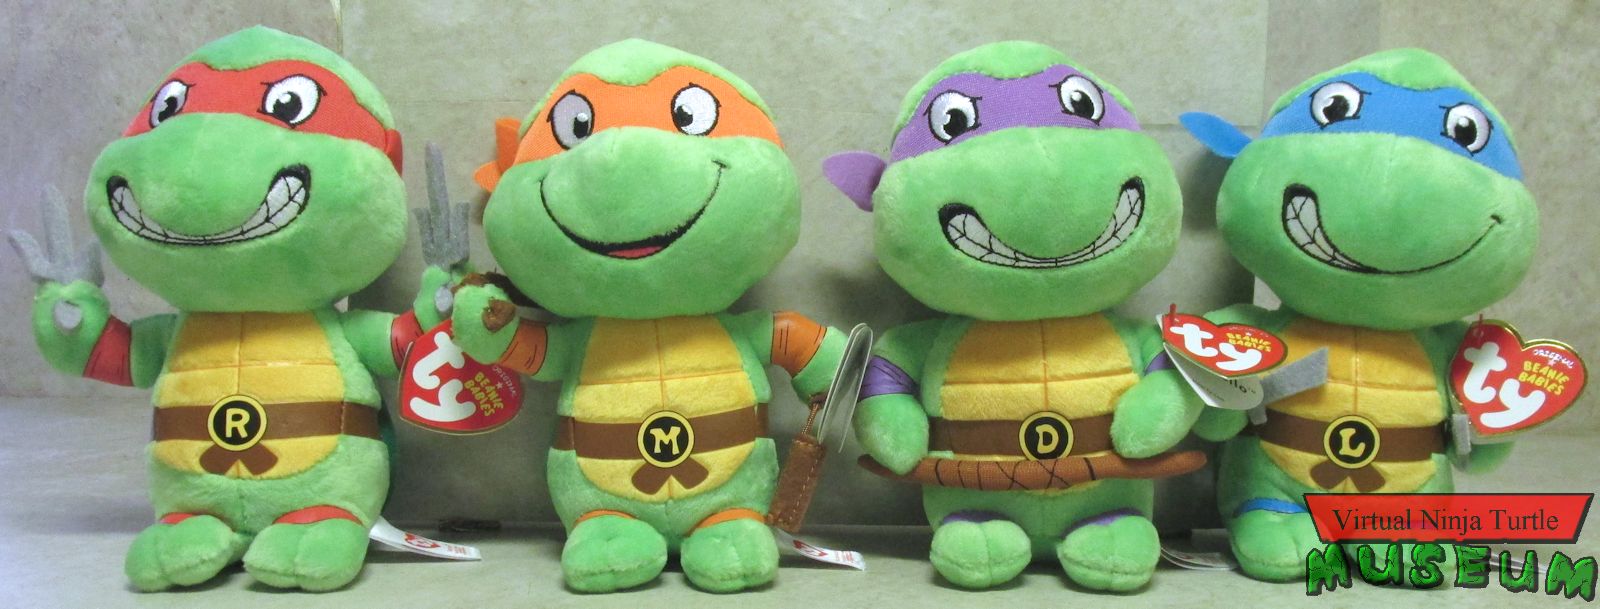 Michelangelo TMNT Turtles Benie Babies Ty stuffed animal Plush figure 13' Medium 